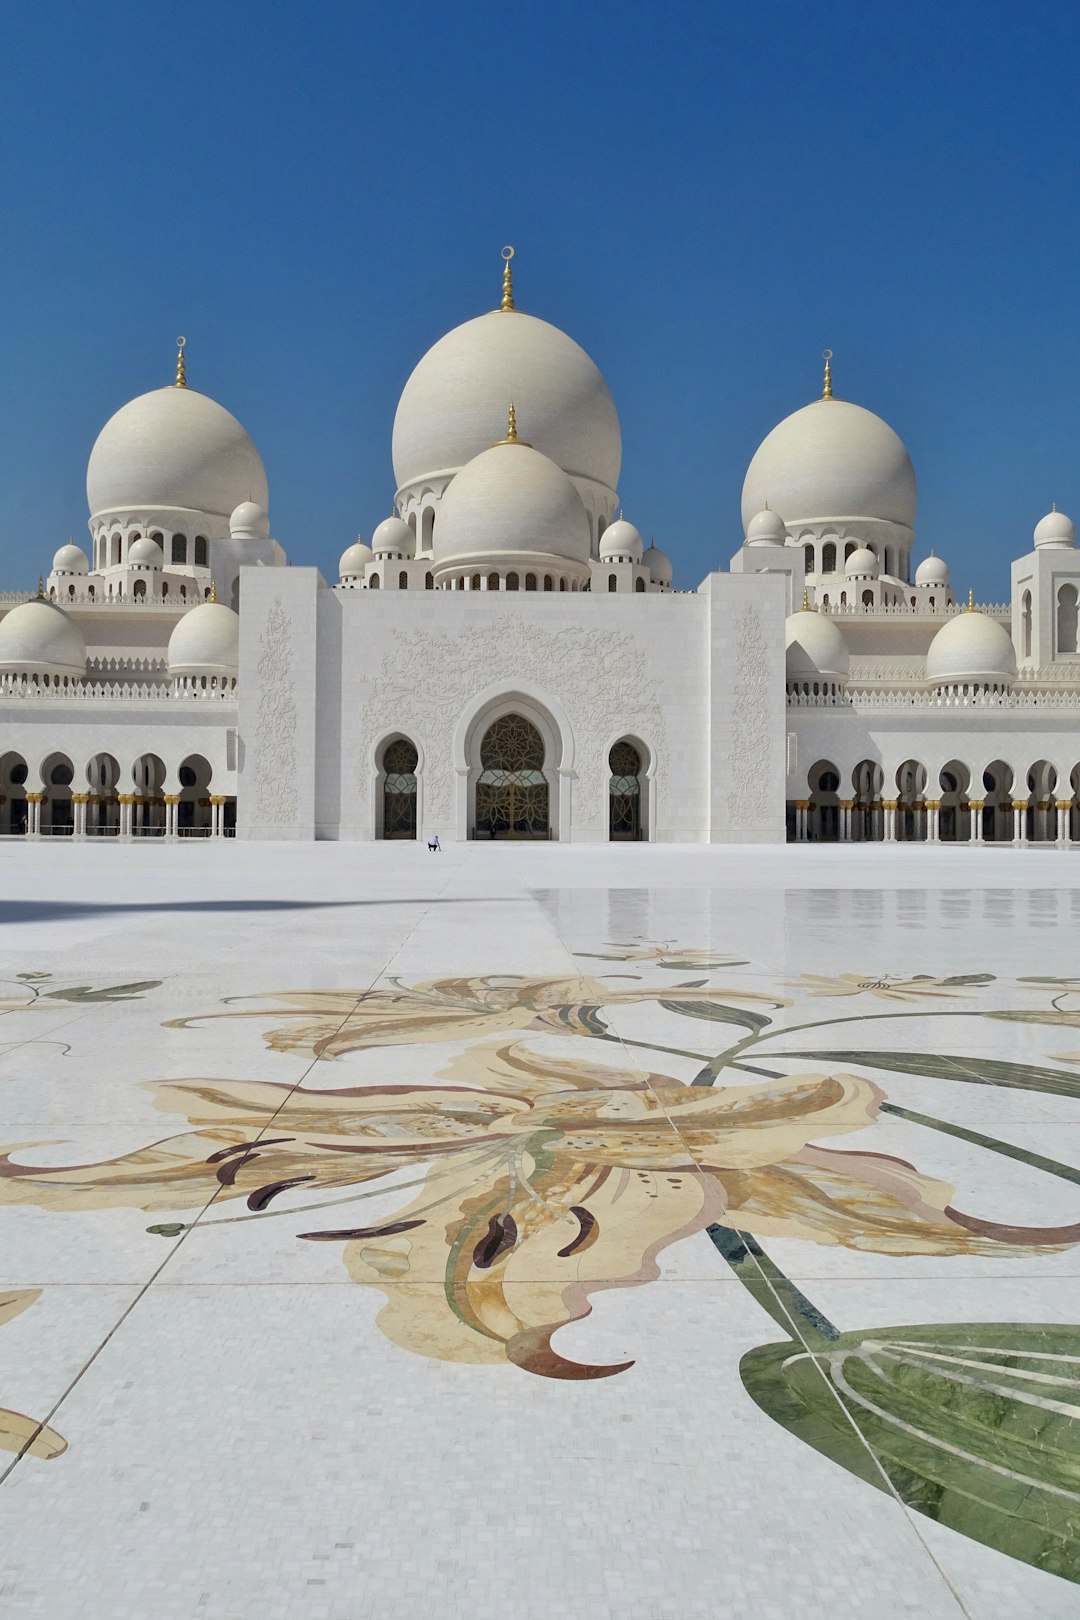 Landmark photo spot Al Rawdah - Abu Dhabi - United Arab Emirates Observation Deck at 300